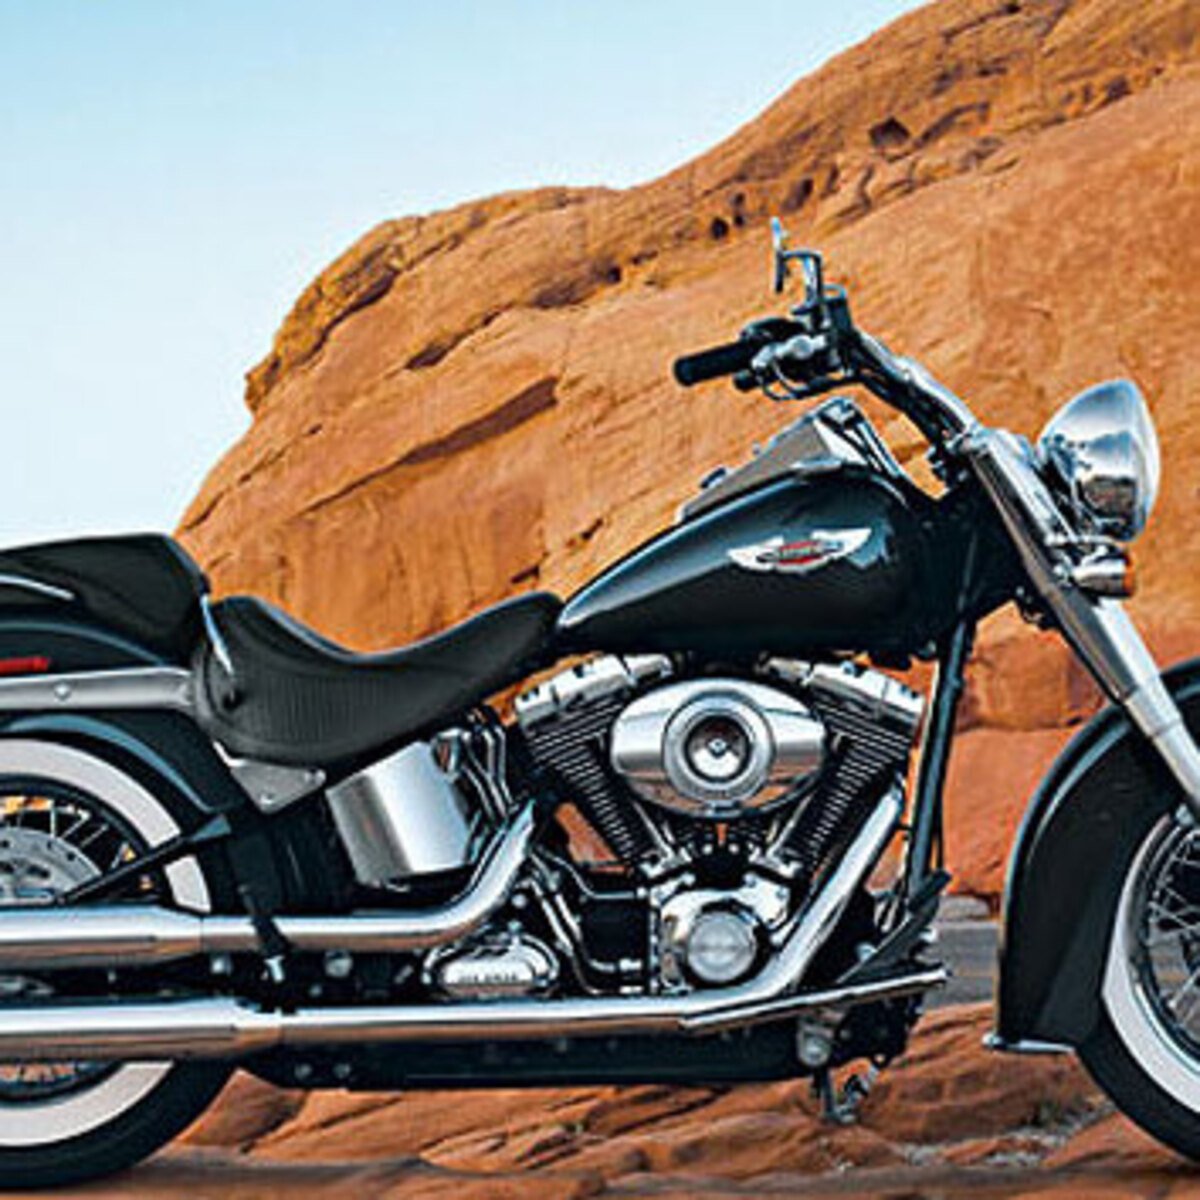 Harley-Davidson 1584 Deluxe (2007 - 08) - FLSTN